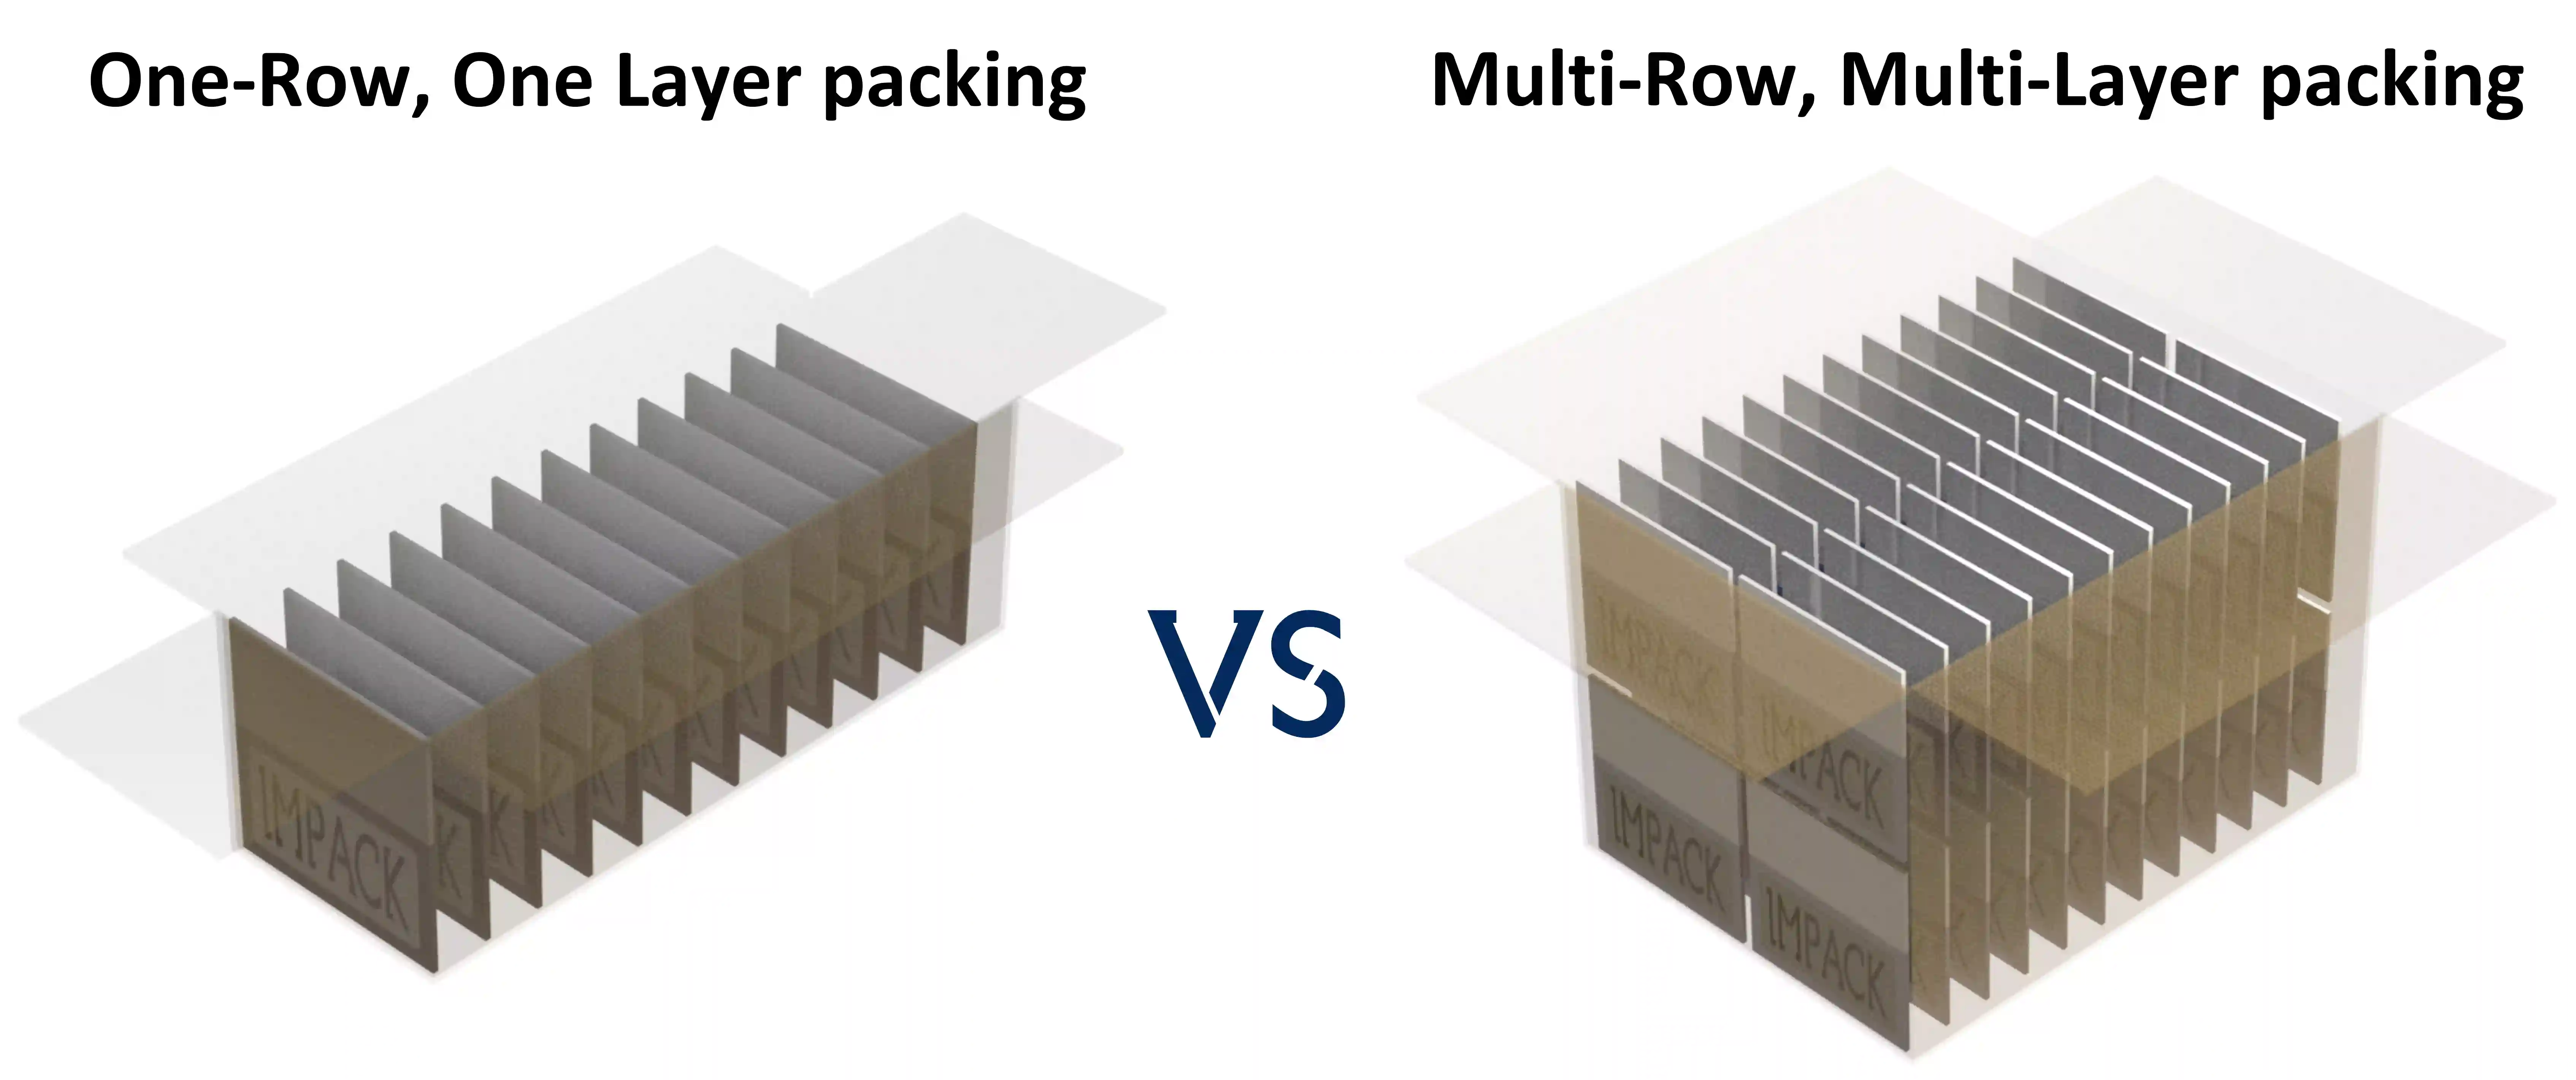 one-row, one layer vs multi-row, multi layer optimize